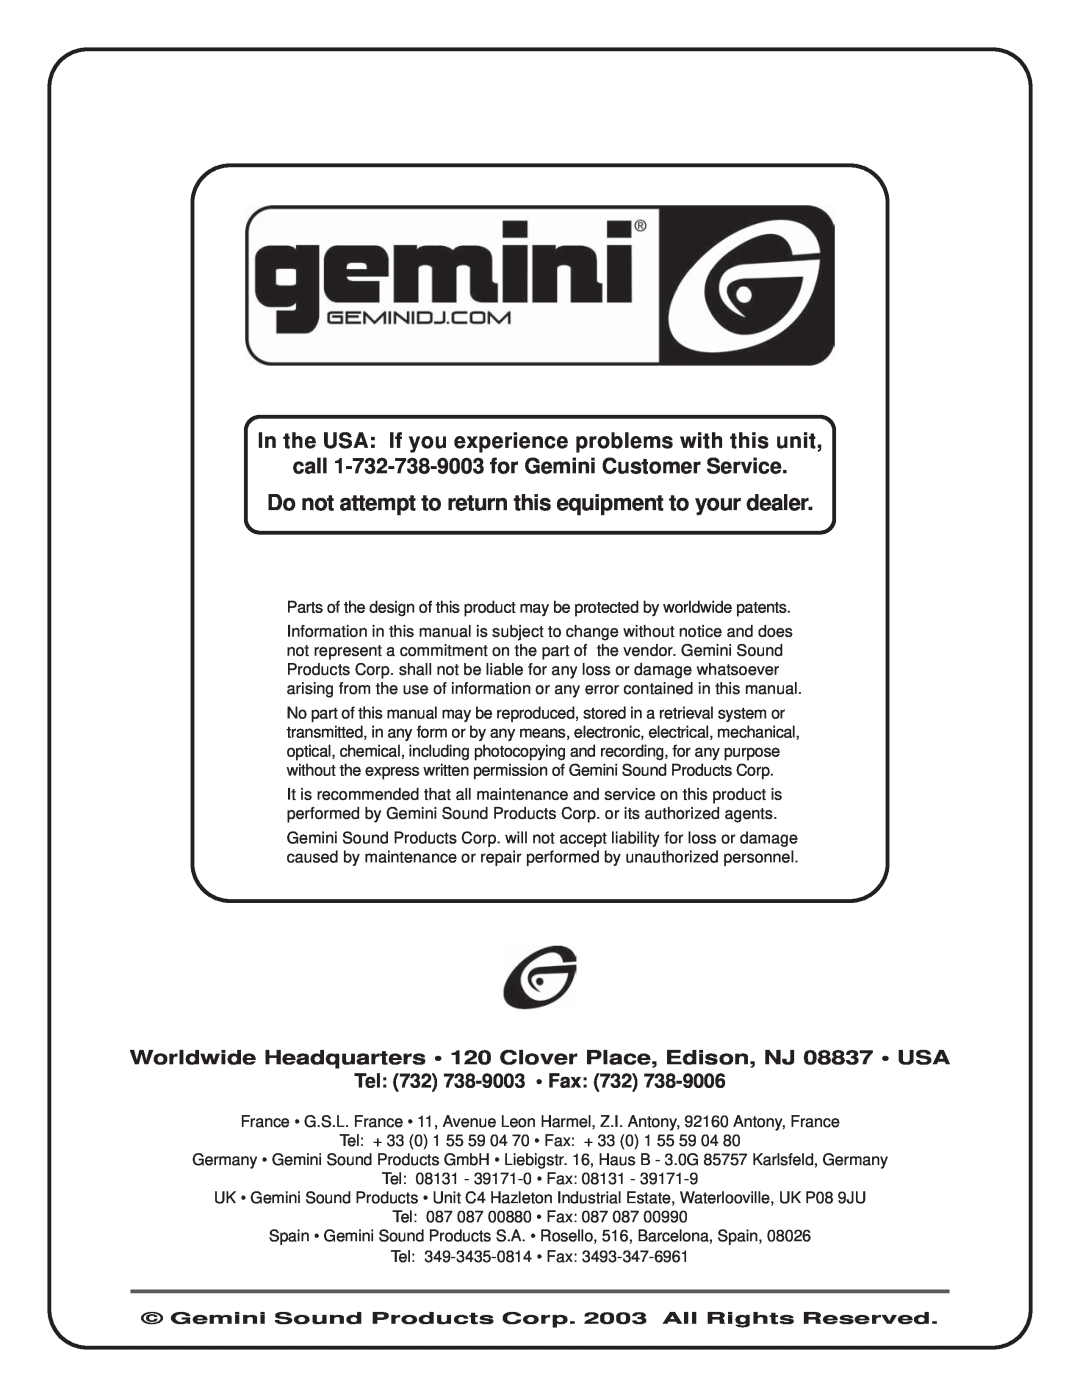 Gemini GSS-18, GSS-1522 manual call 1-732-738-9003for Gemini Customer Service, Tel 732 738-9003 Fax 